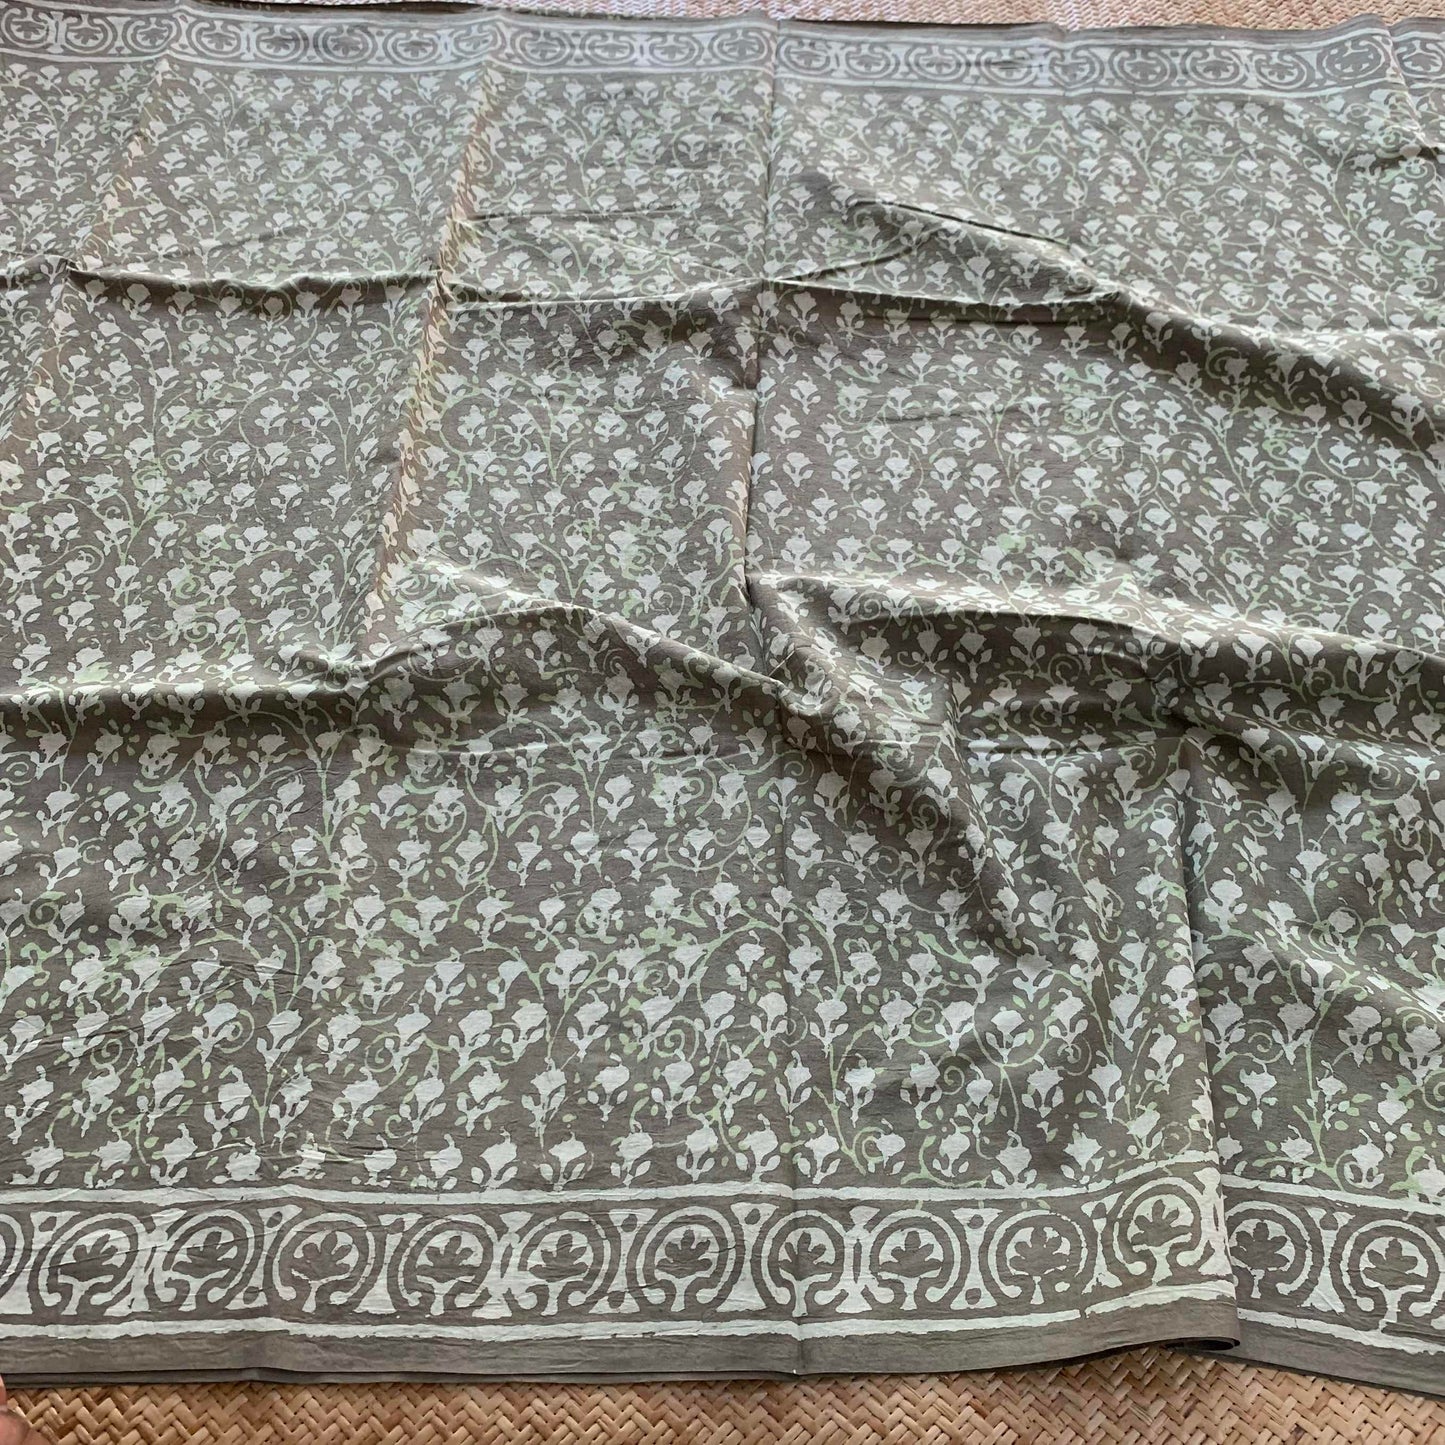 Mul Mul Cotton saree, Dabu Hand Block Printed, Grey